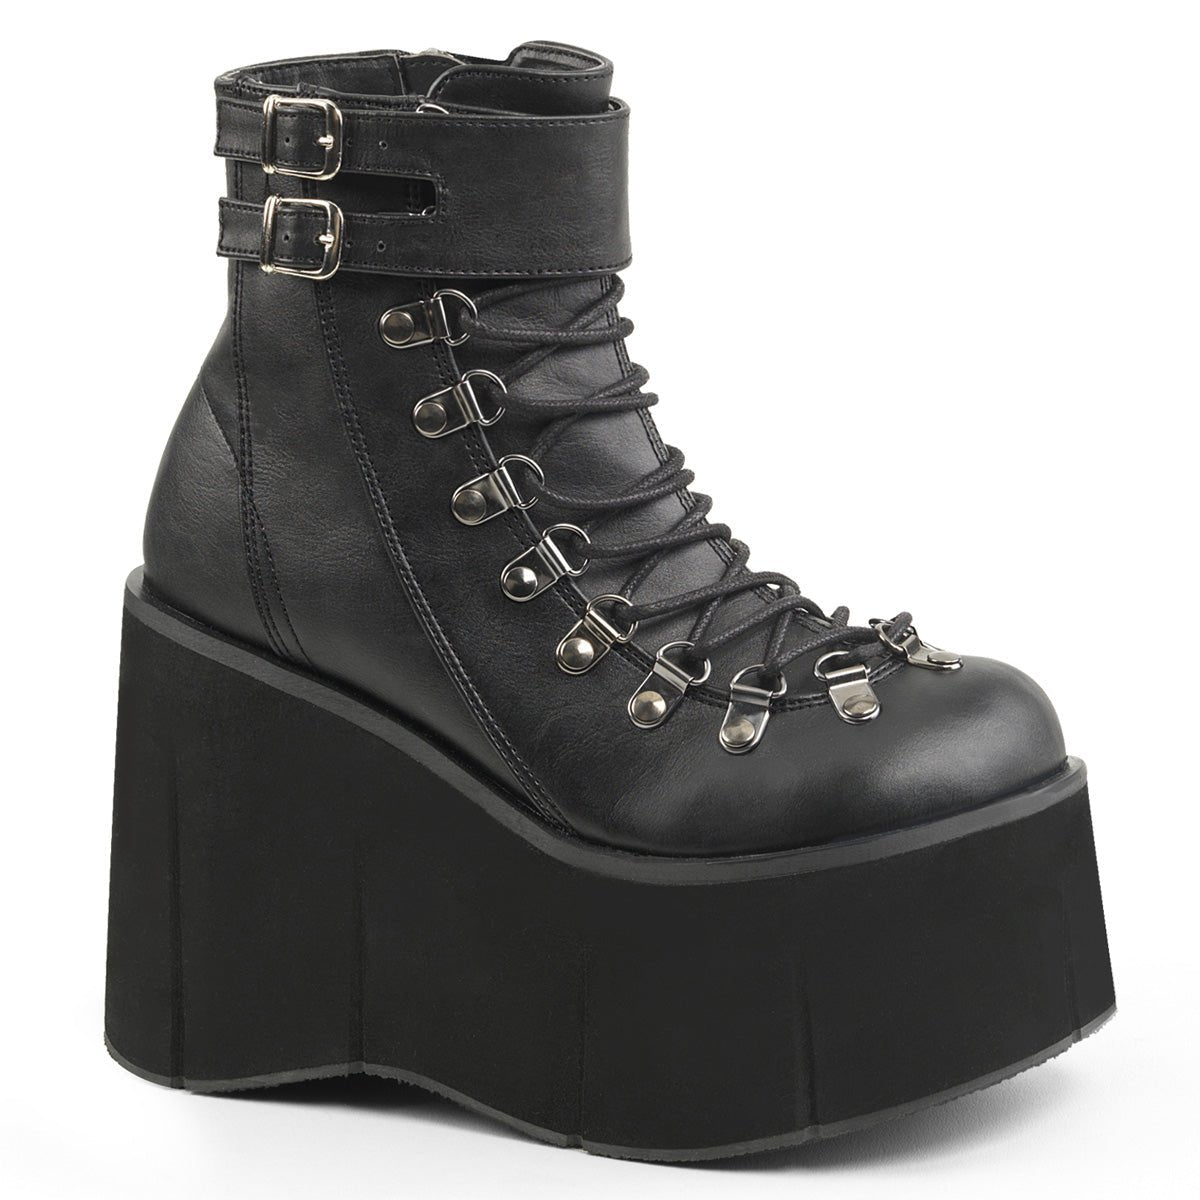 Too Fast | Demonia Kera 21 | Black Vegan Leather Women's Ankle Boots